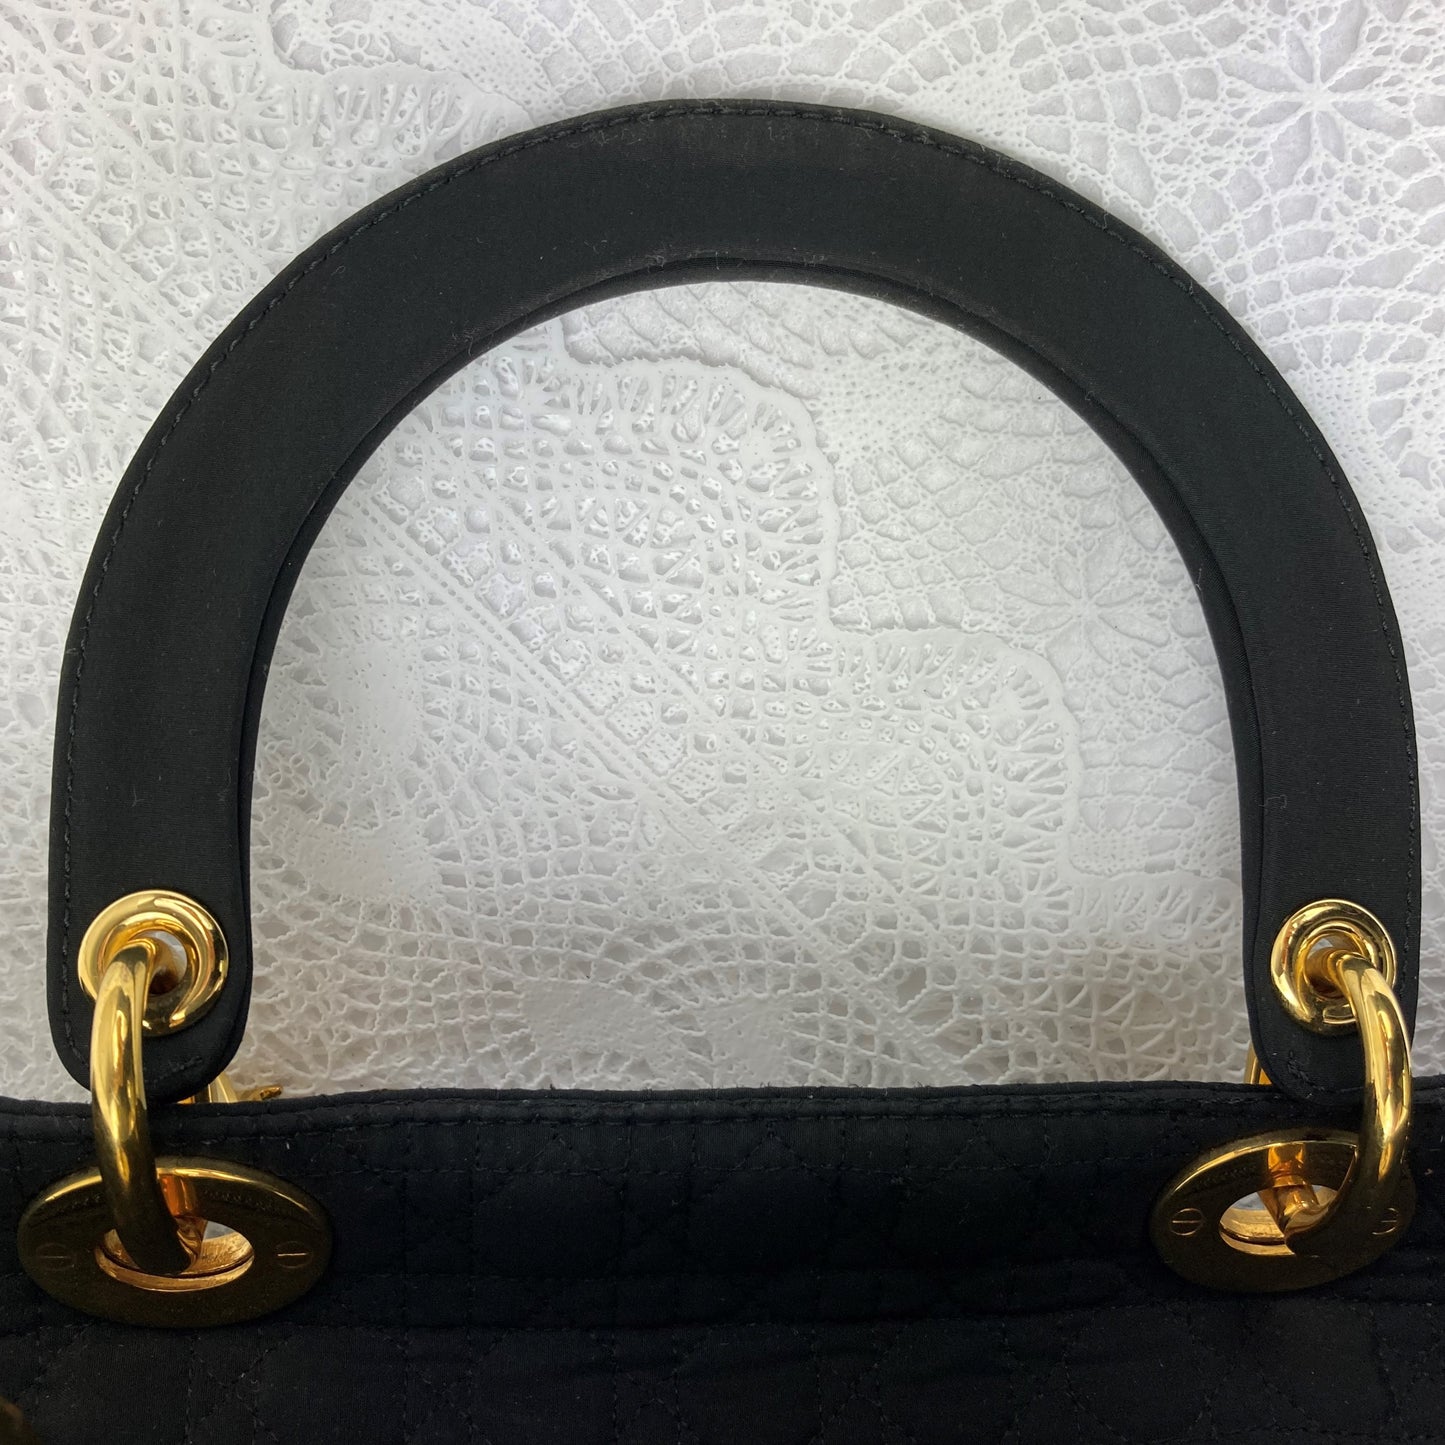 100 % Authentic Christian Dior Lady Dior Cannage nylon handbag(USED) 457-55